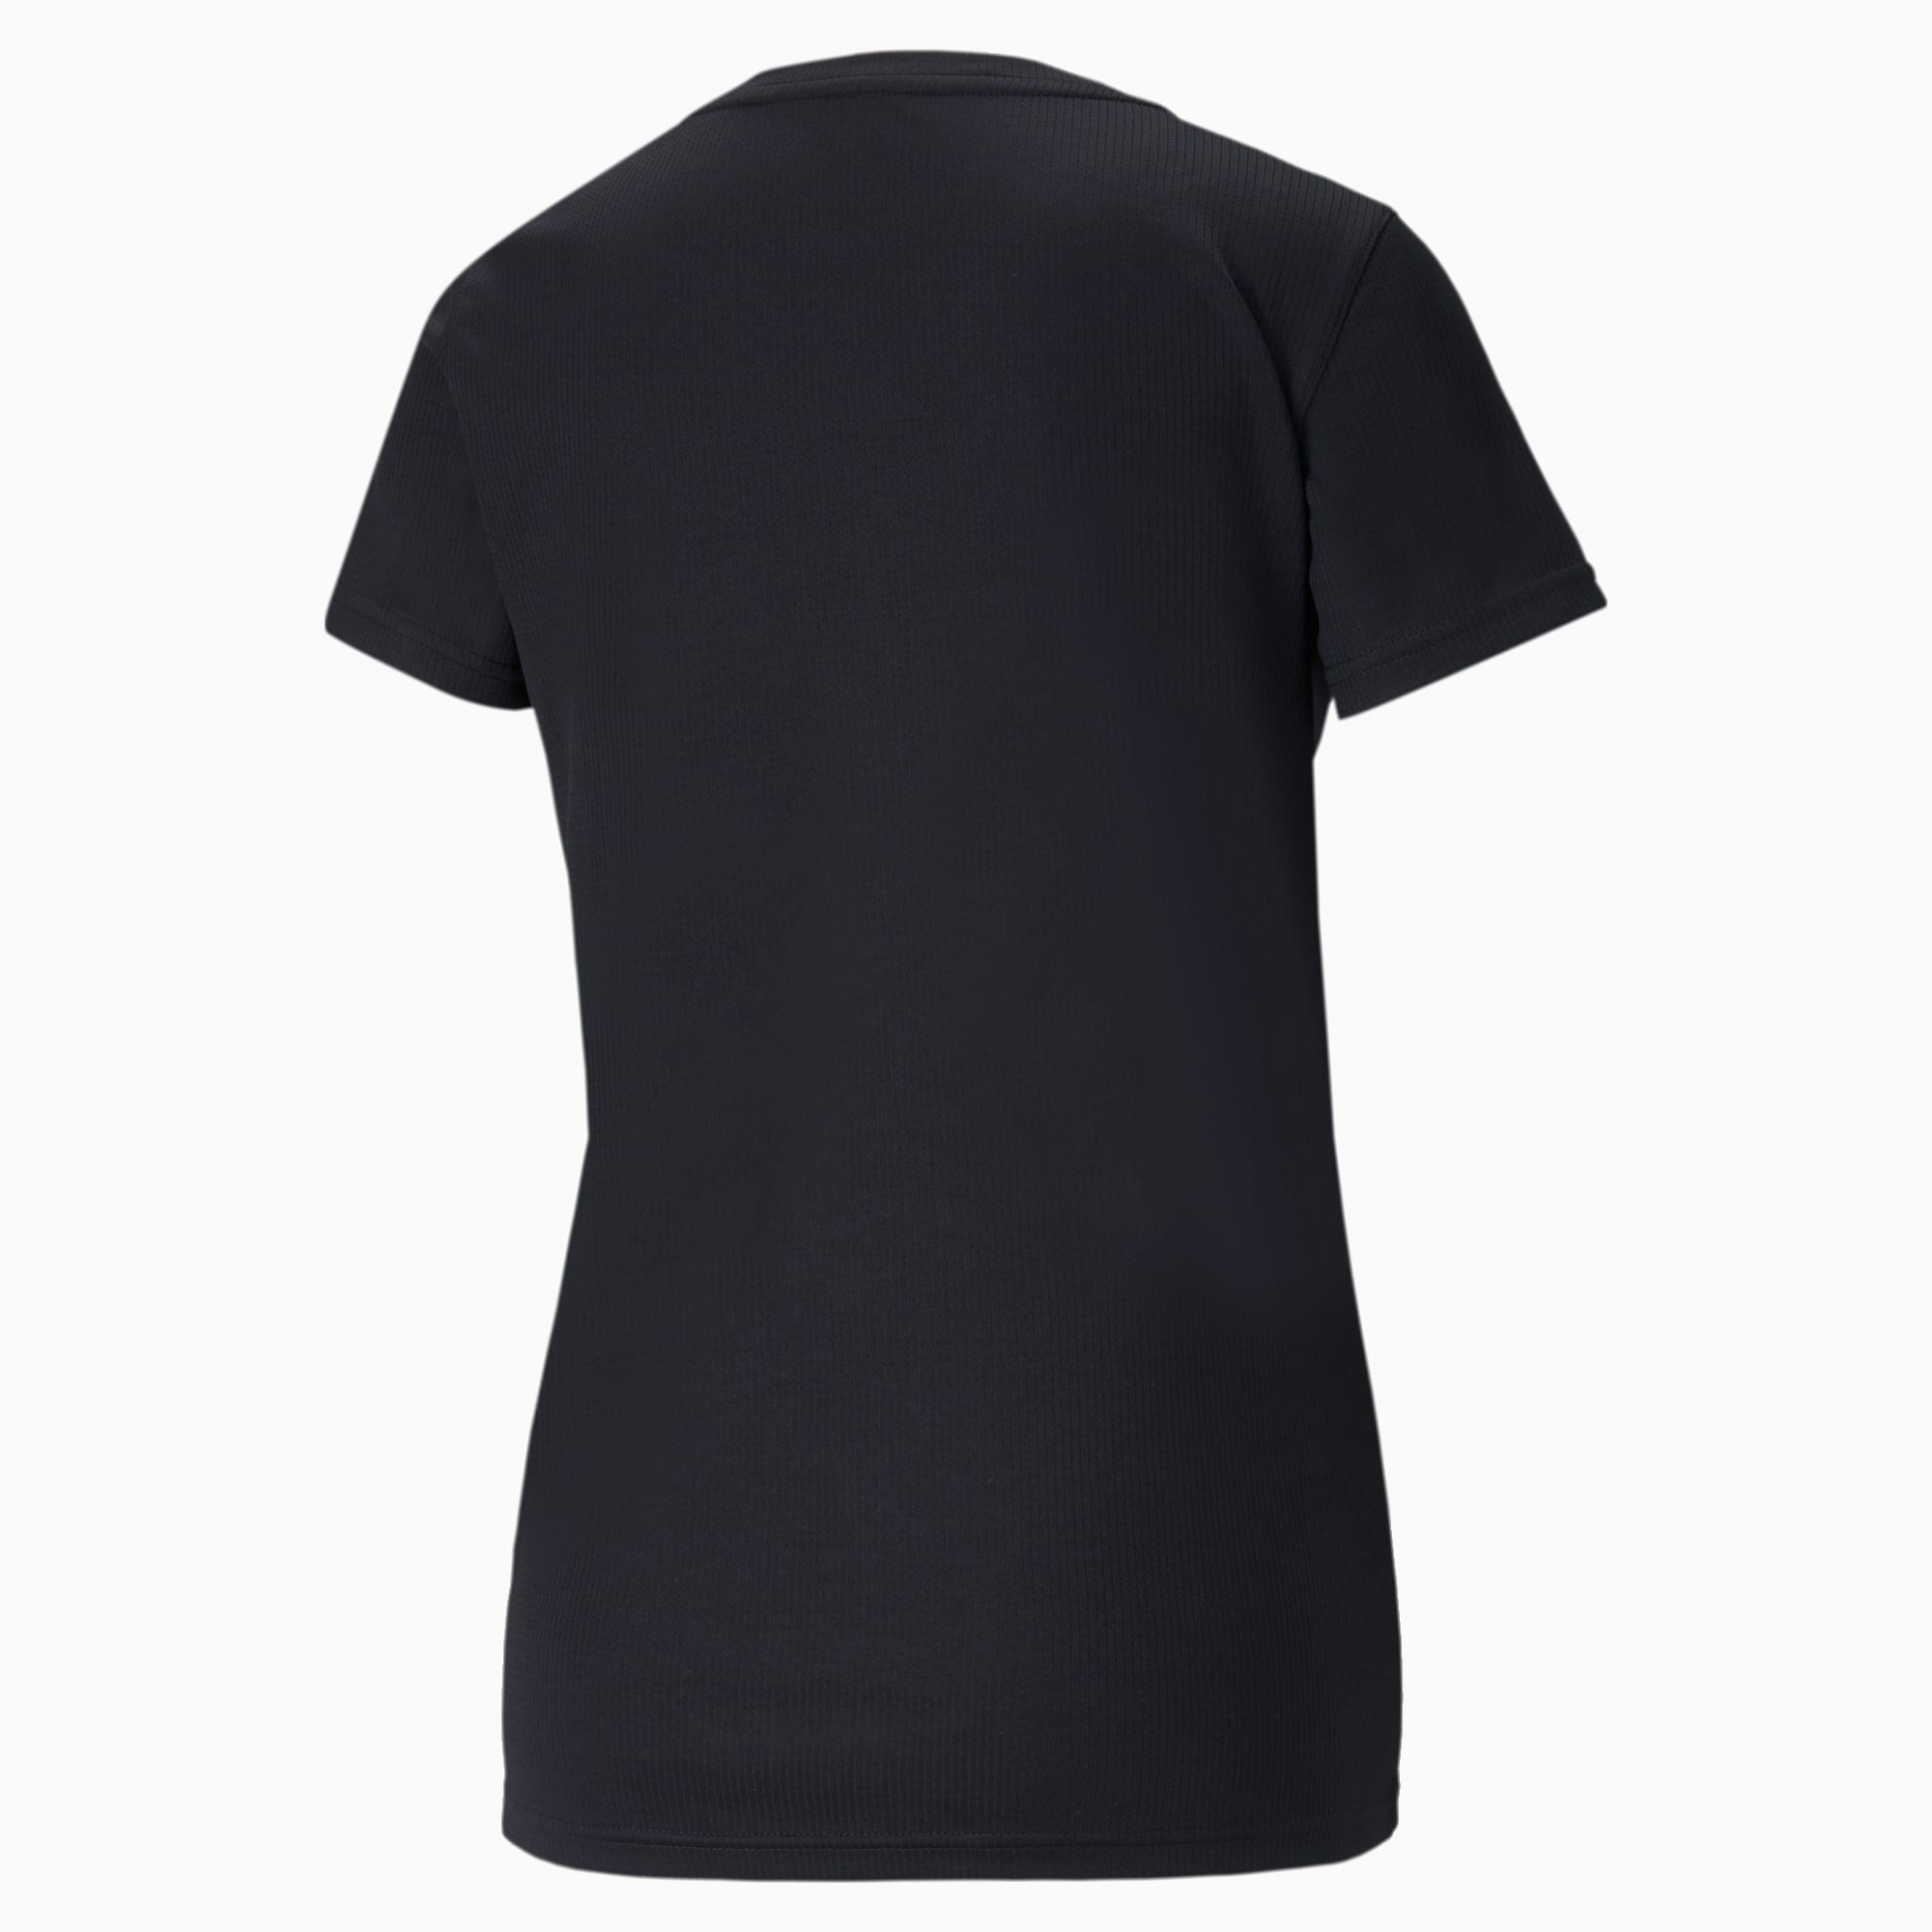 PUMA Performance Women's Training T-Shirt, Black, Size XL, Clothing